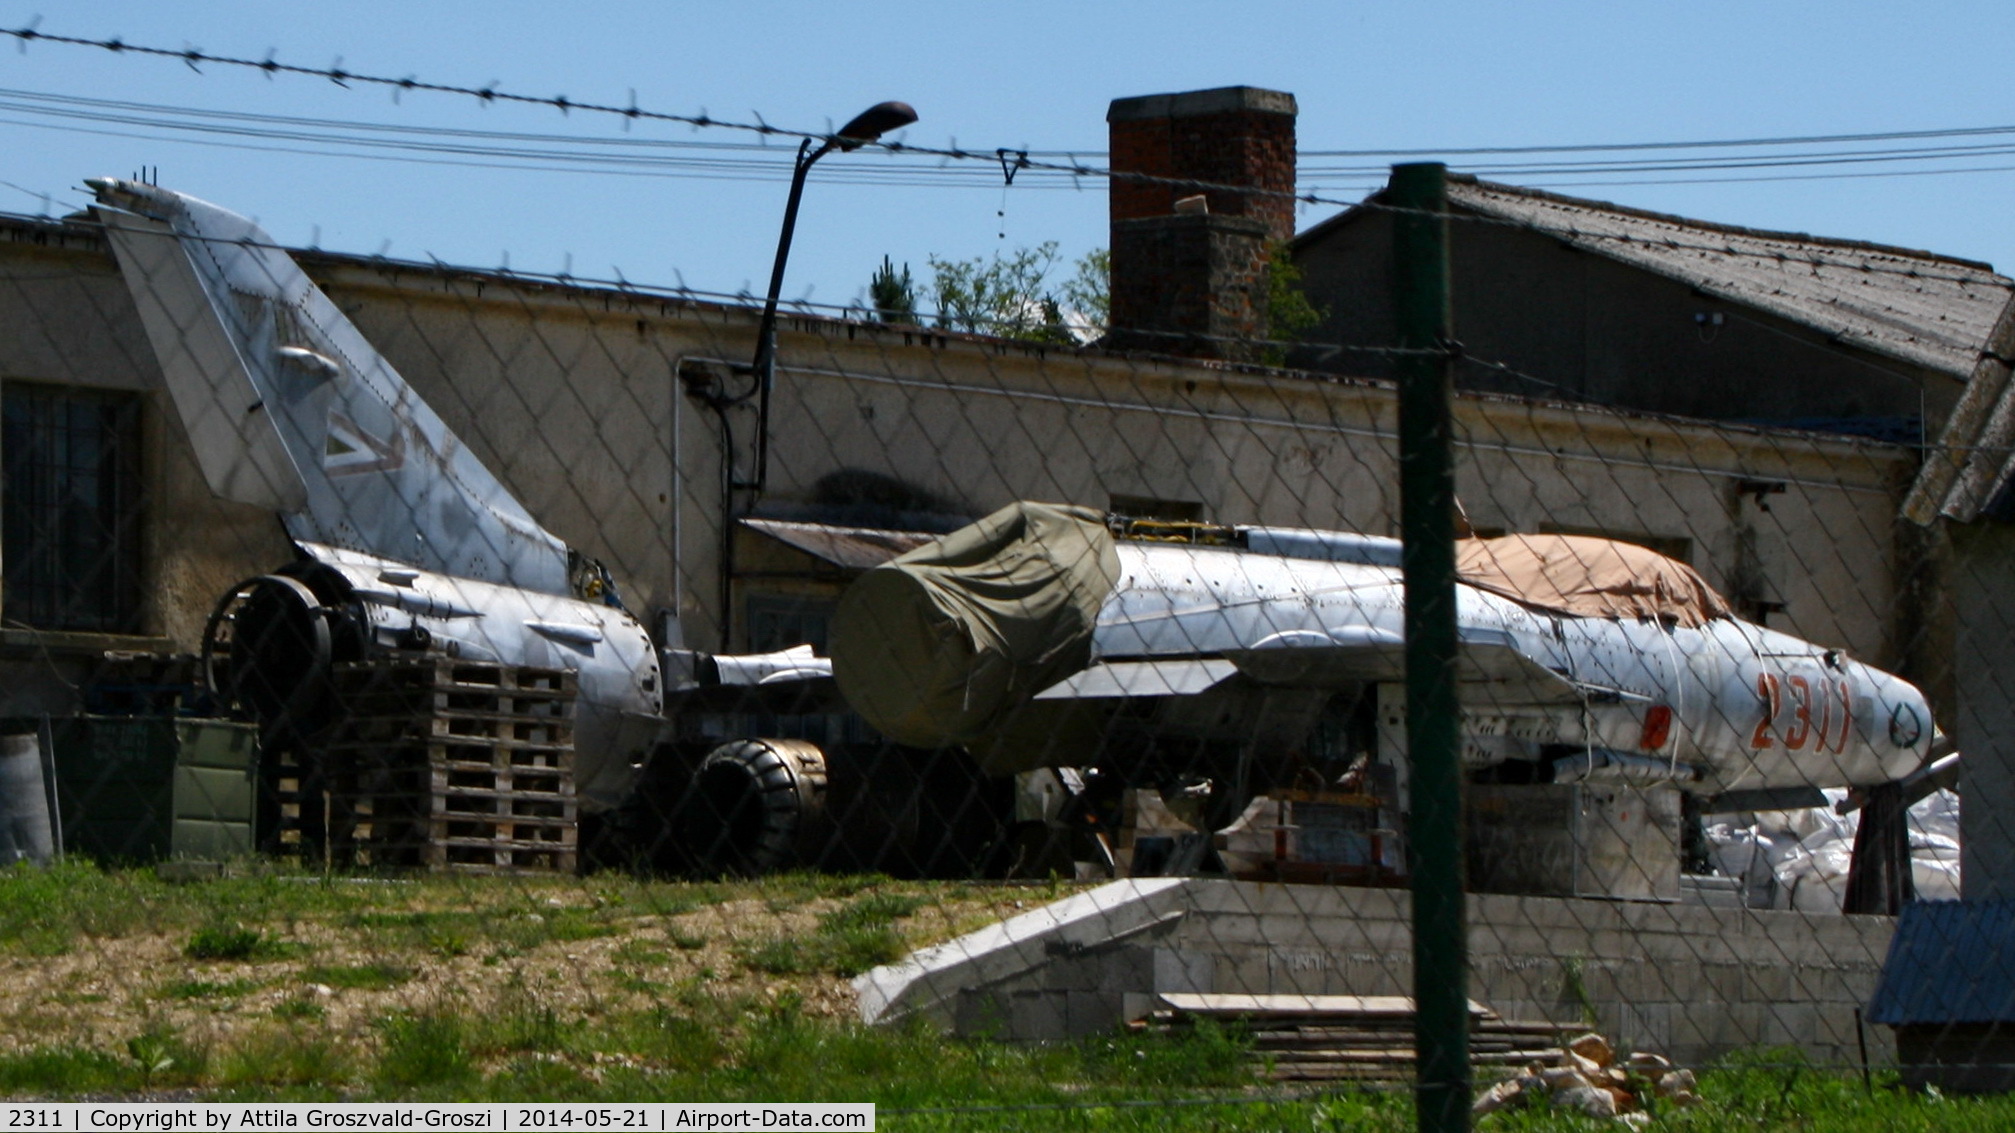 2311, 1962 Mikoyan-Gurevich MiG-21F-13 C/N 742311, Kövesgyür-puszta, Hungary. A collector's site